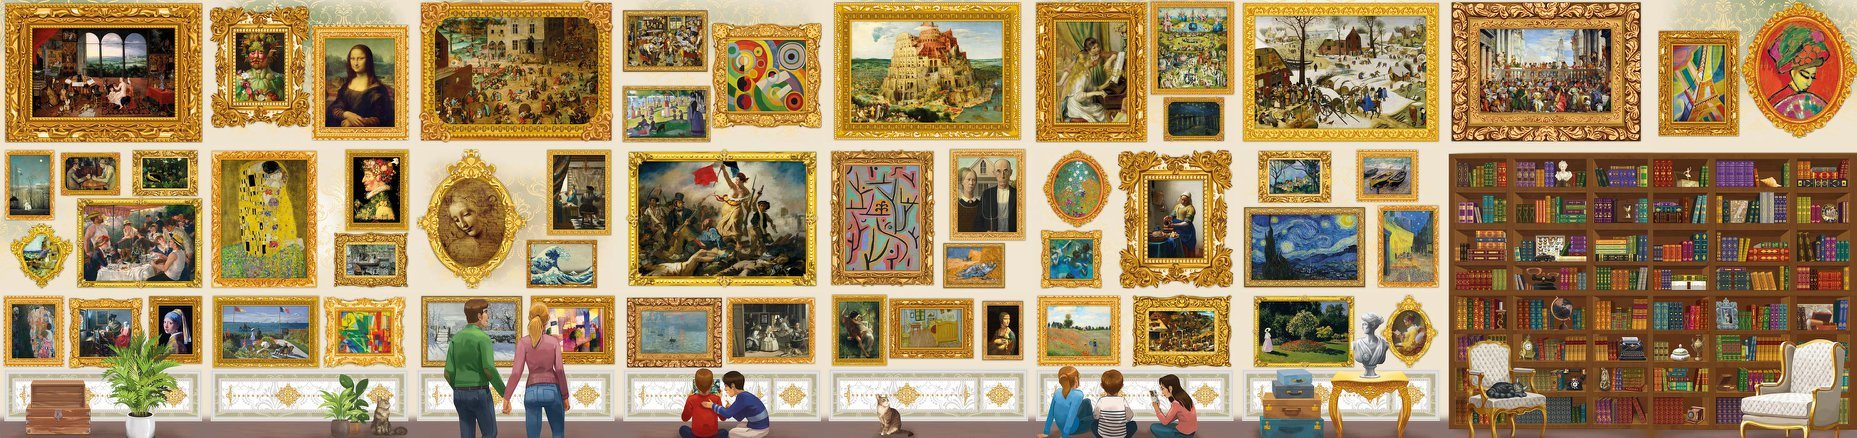 plus-grand-puzzle-du-monde-travel-around-art-puzzle-54000-pieces.81143-1.fs